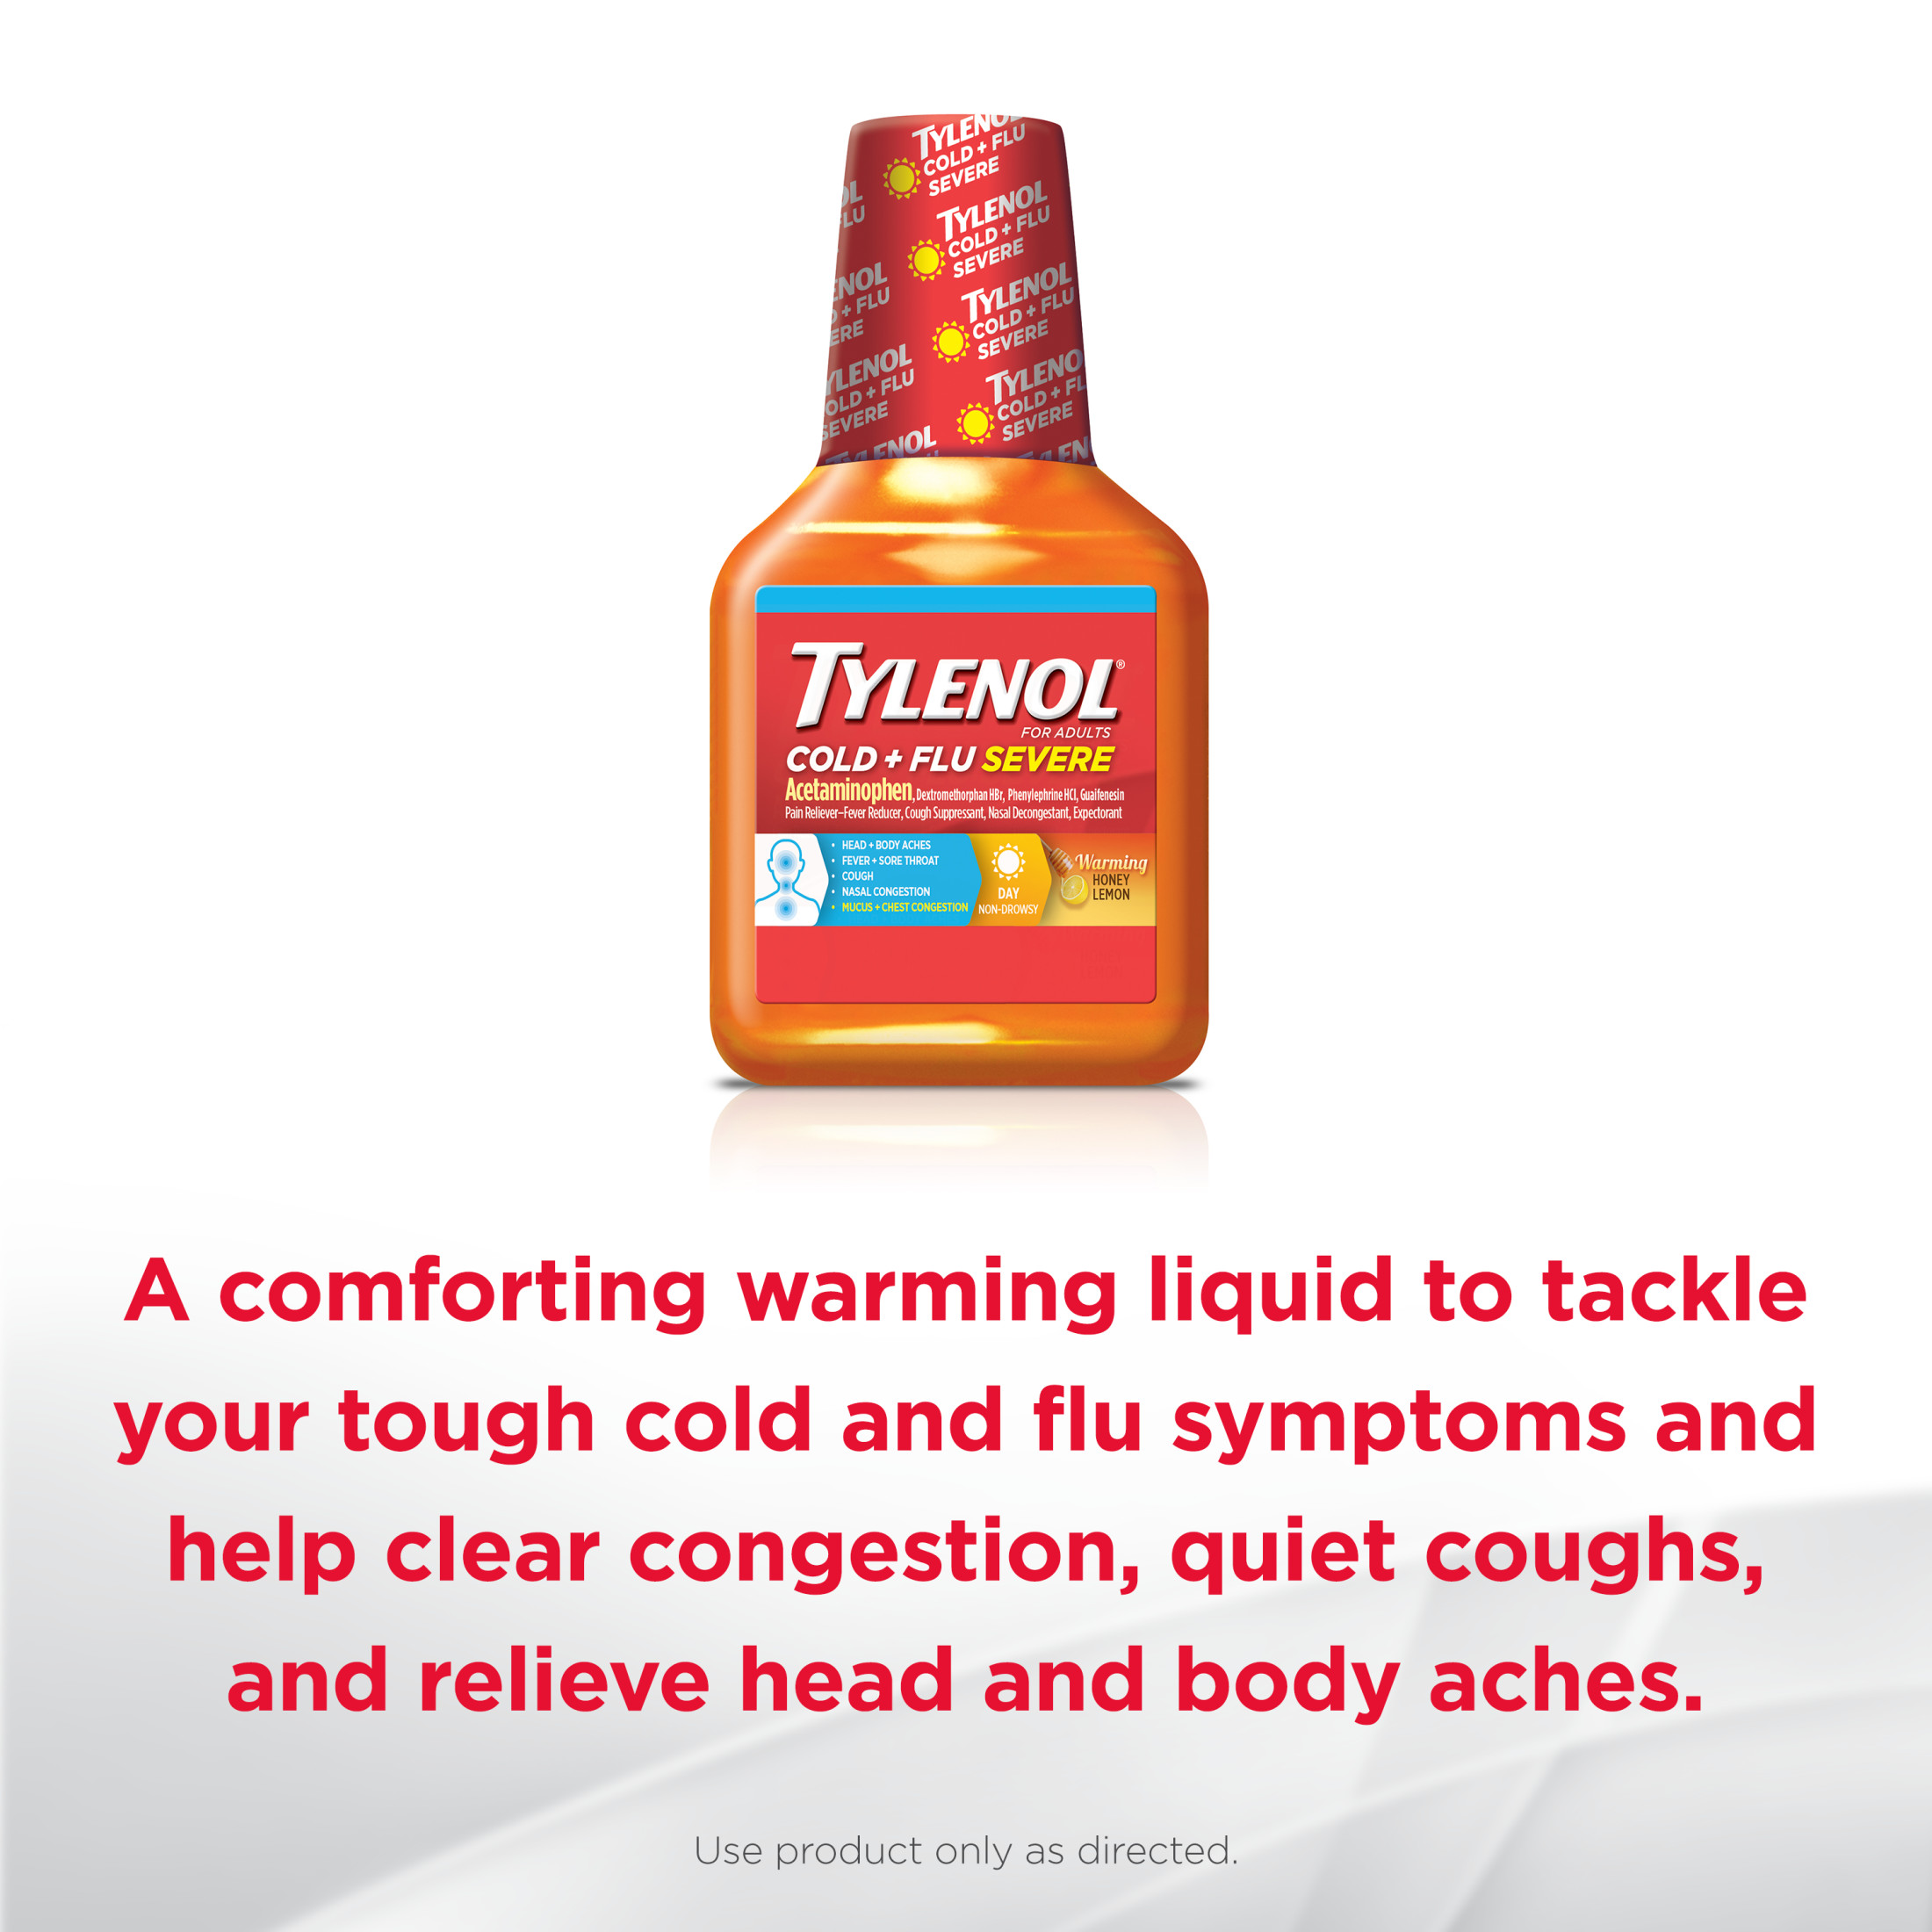 Tylenol Cold + Flu Severe Flu Medicine, Honey Lemon Flavor, 8 fl. oz - image 2 of 12